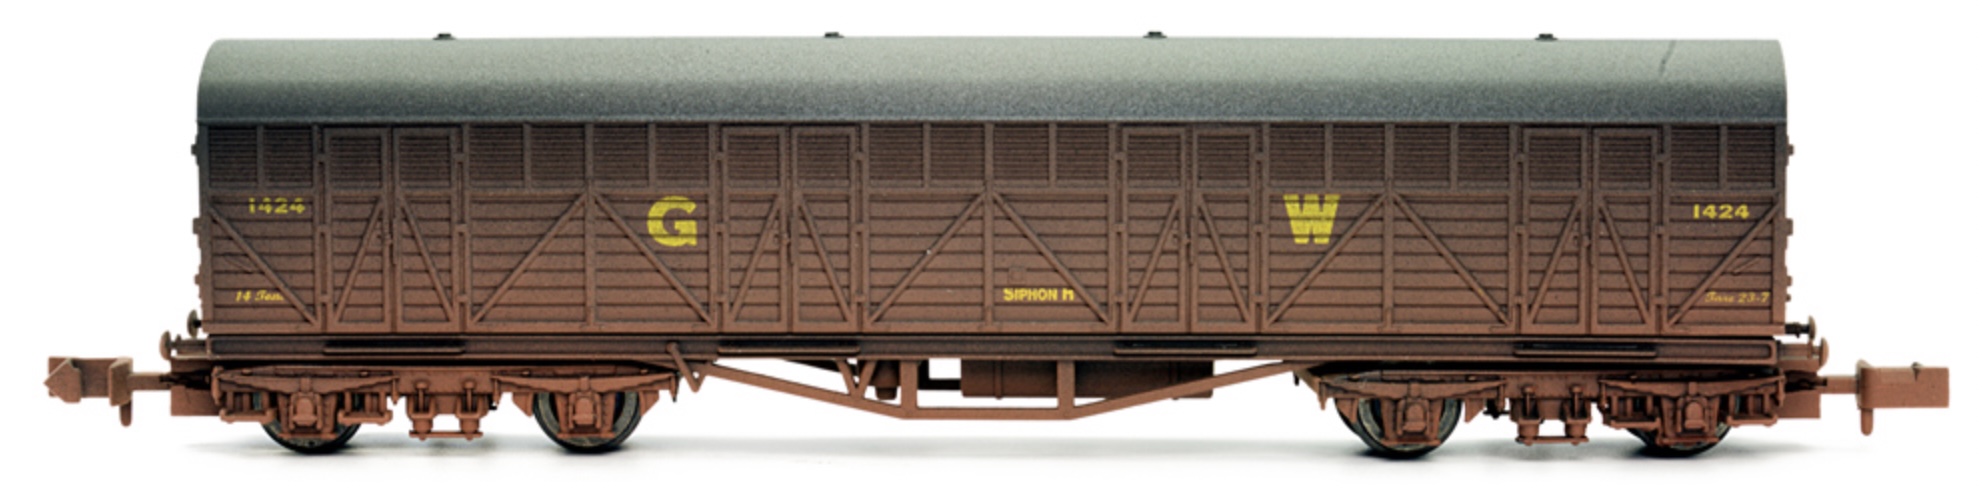 N Scale - Dapol - 2F-023-013 - Siphon Wagon, Wood, H-Series - Great Western - 1426